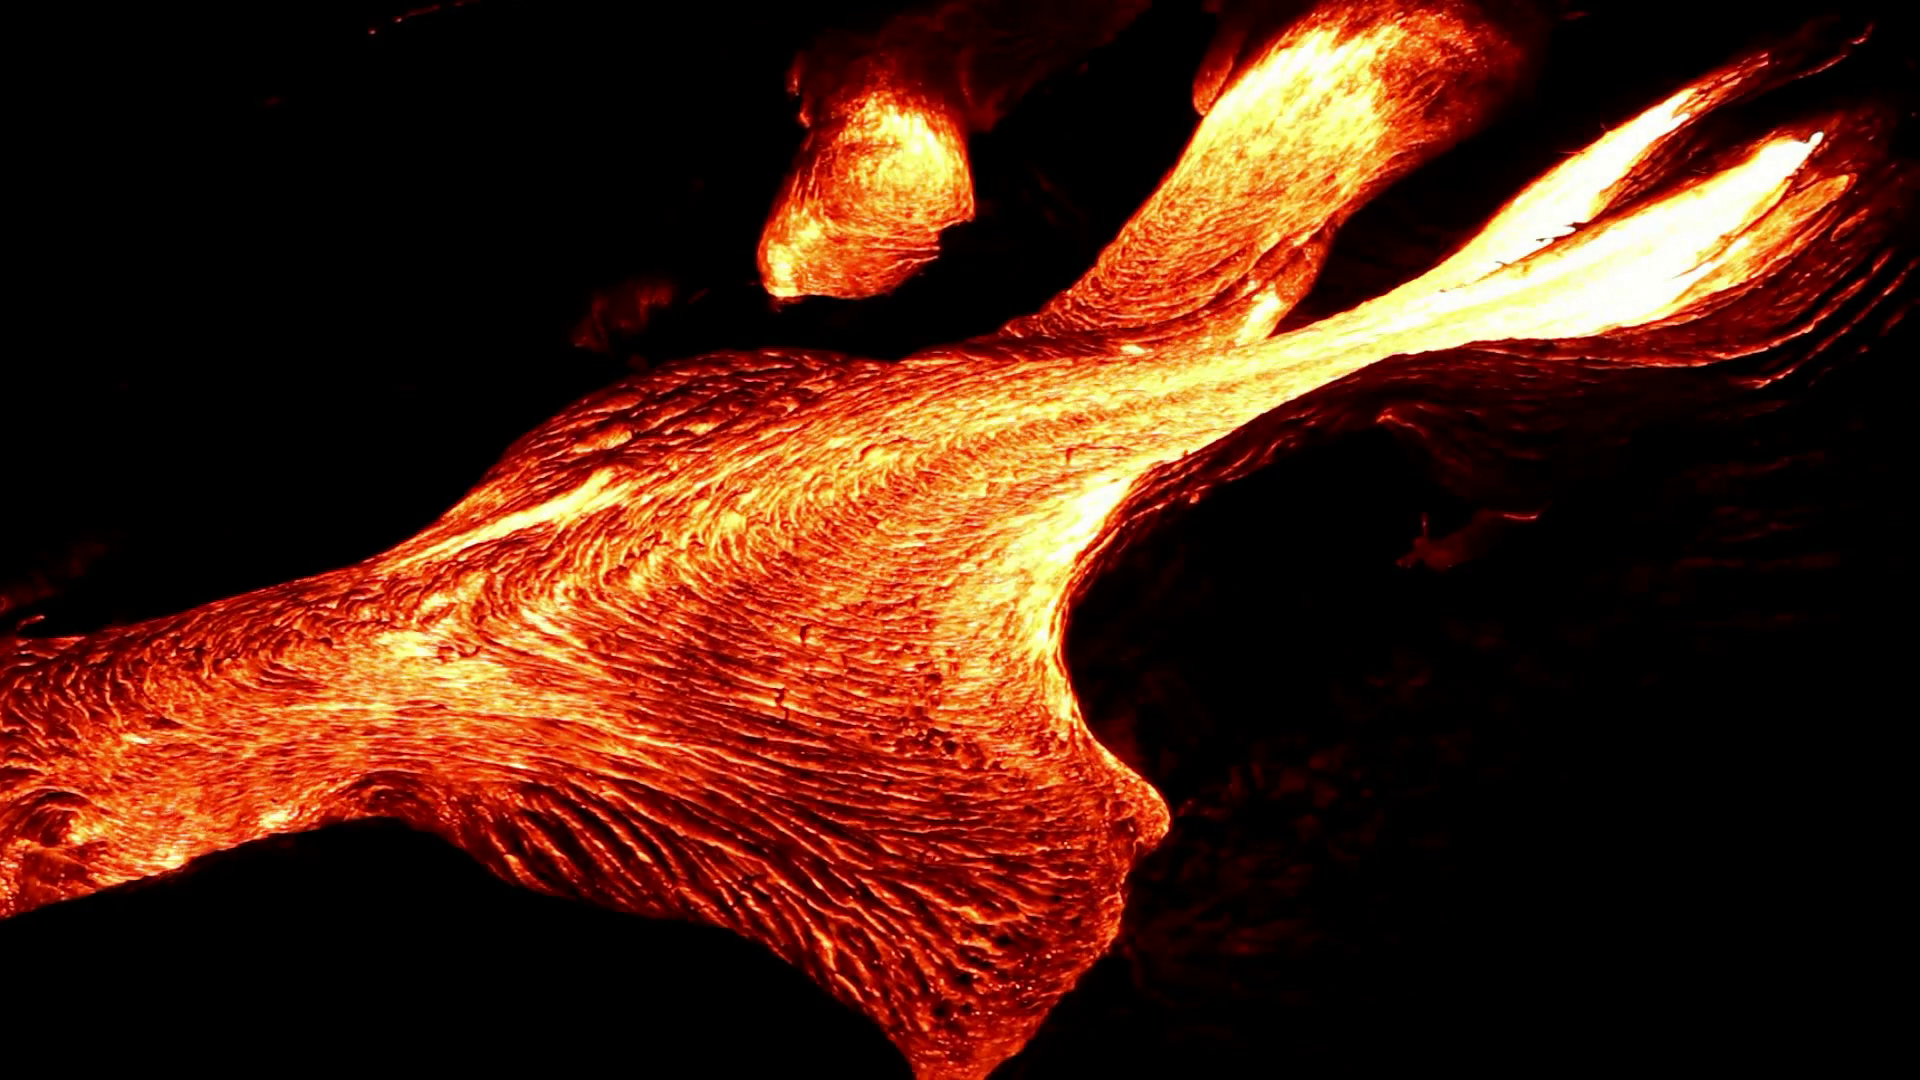 Lava PNG Image in Transparent pngteam.com